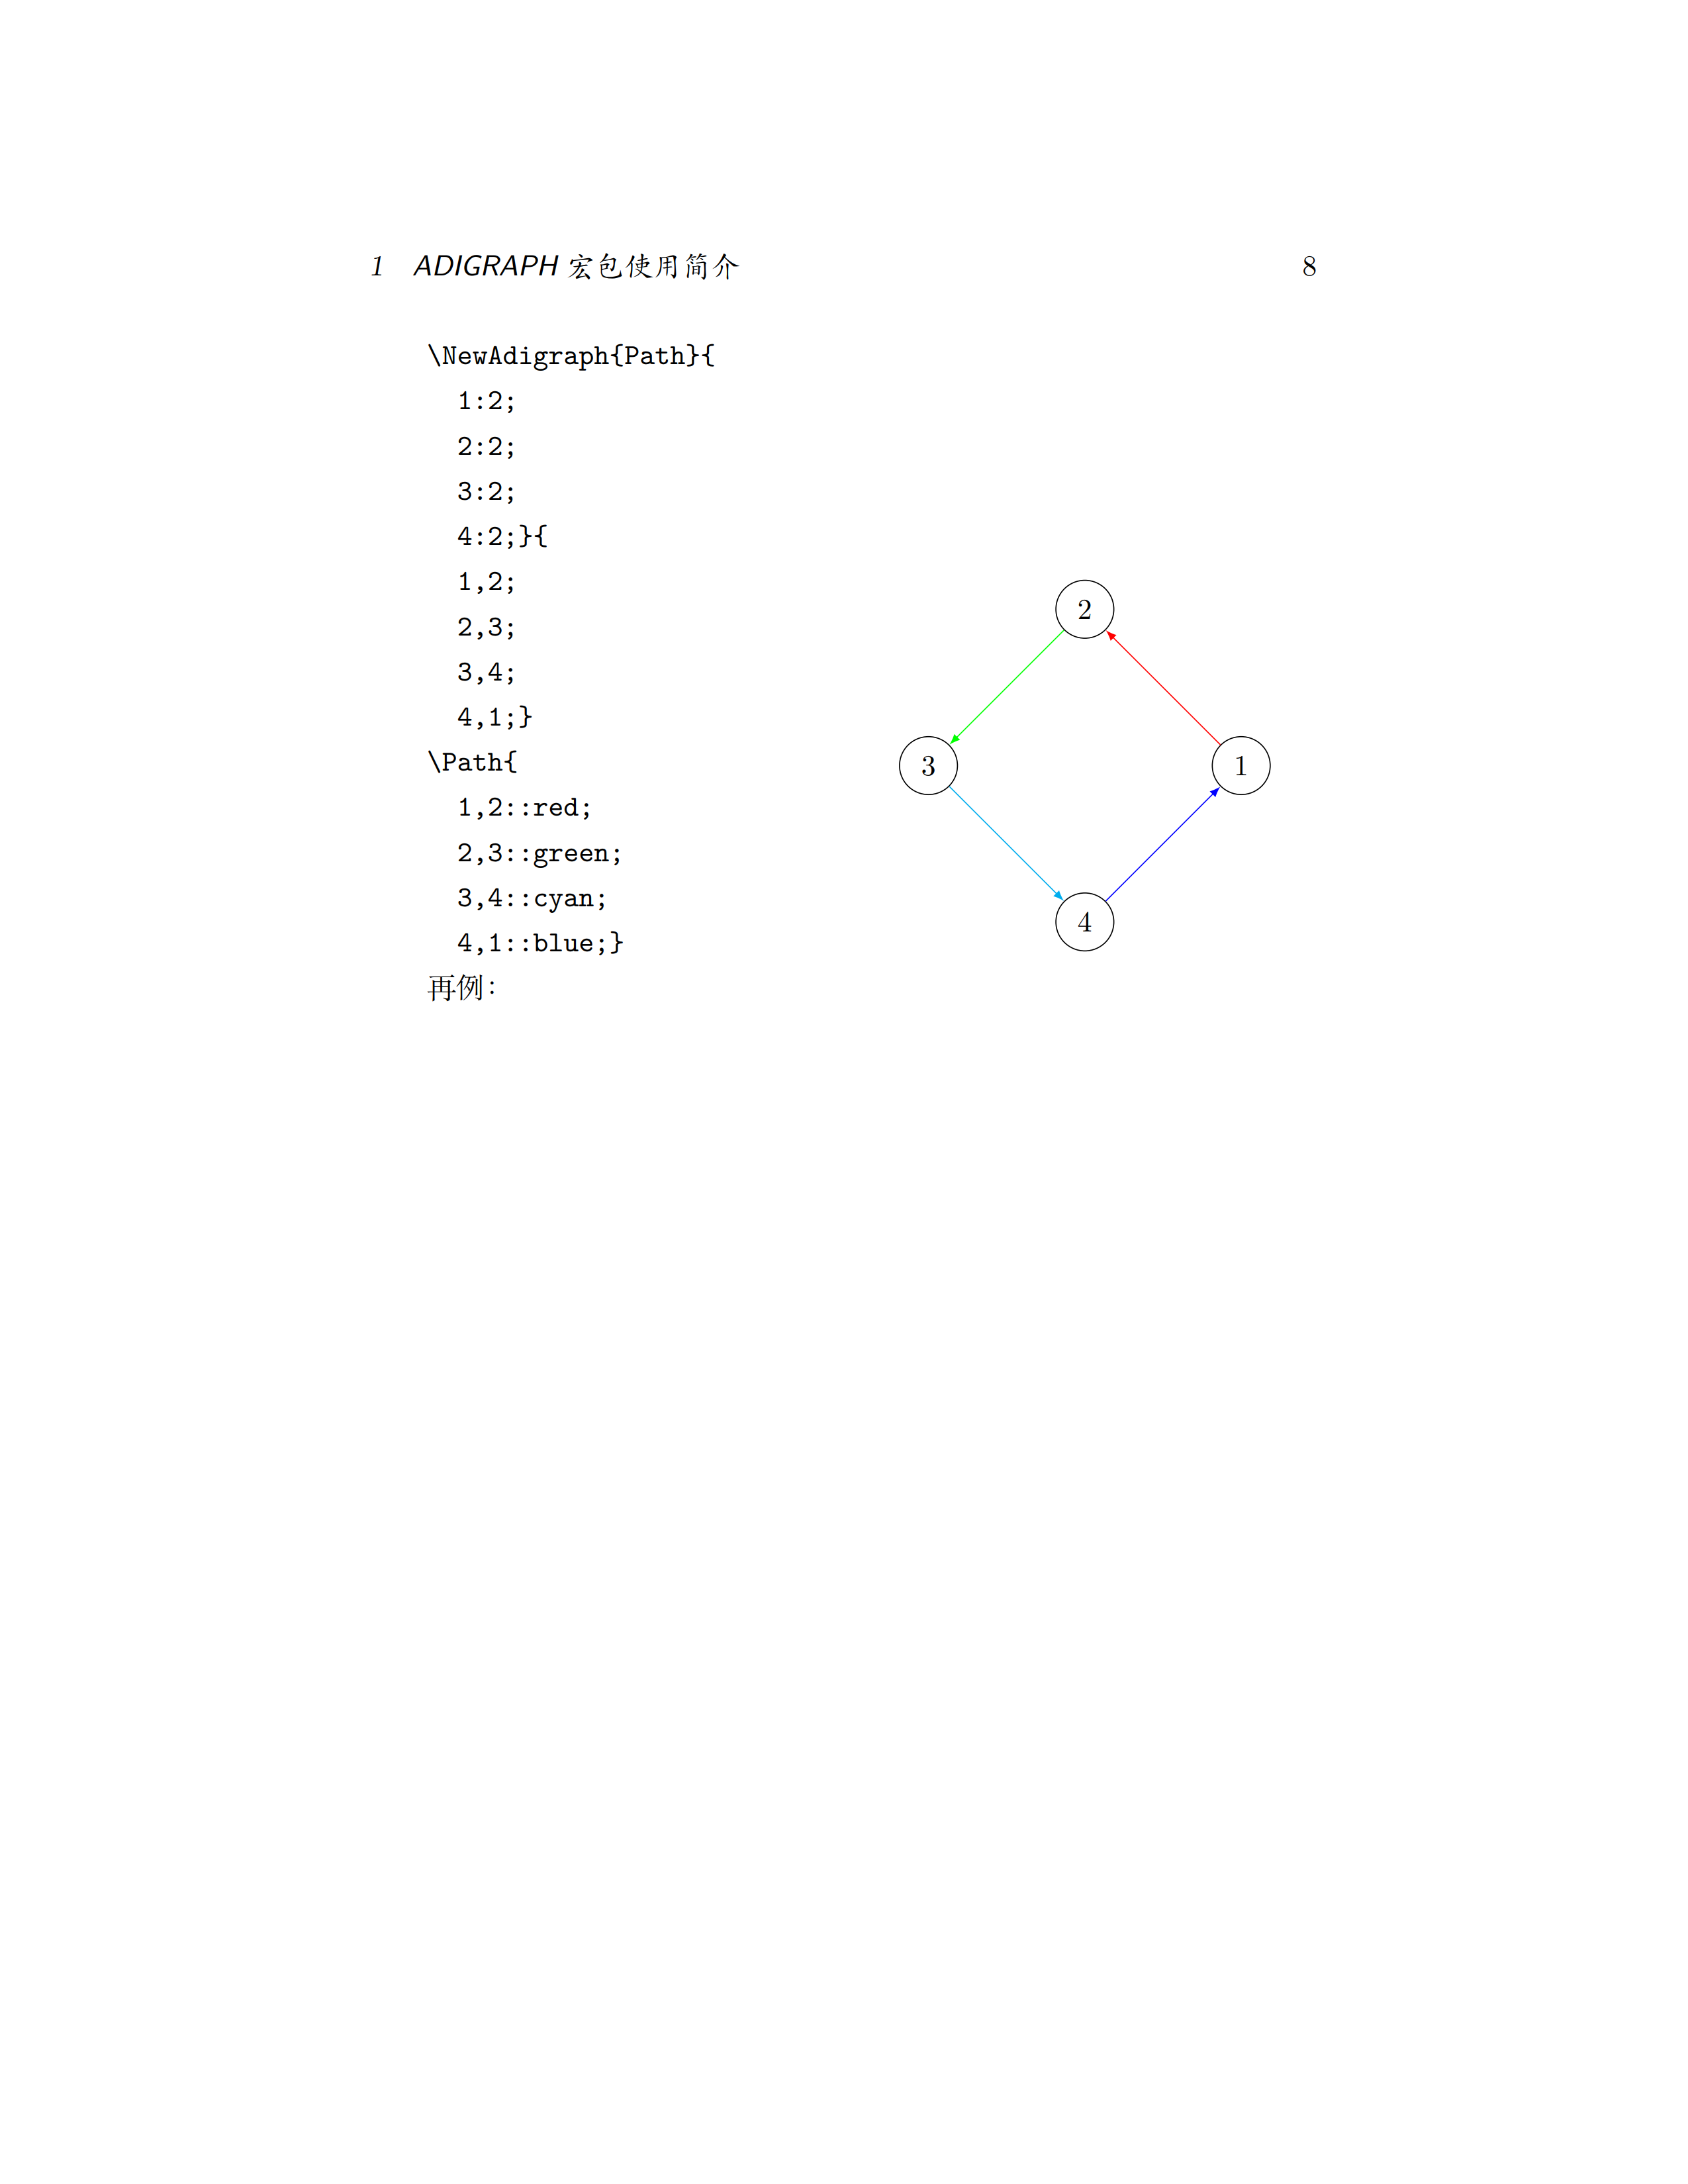 使用adigraph和dijkstra宏包绘制Dijkstra算法图